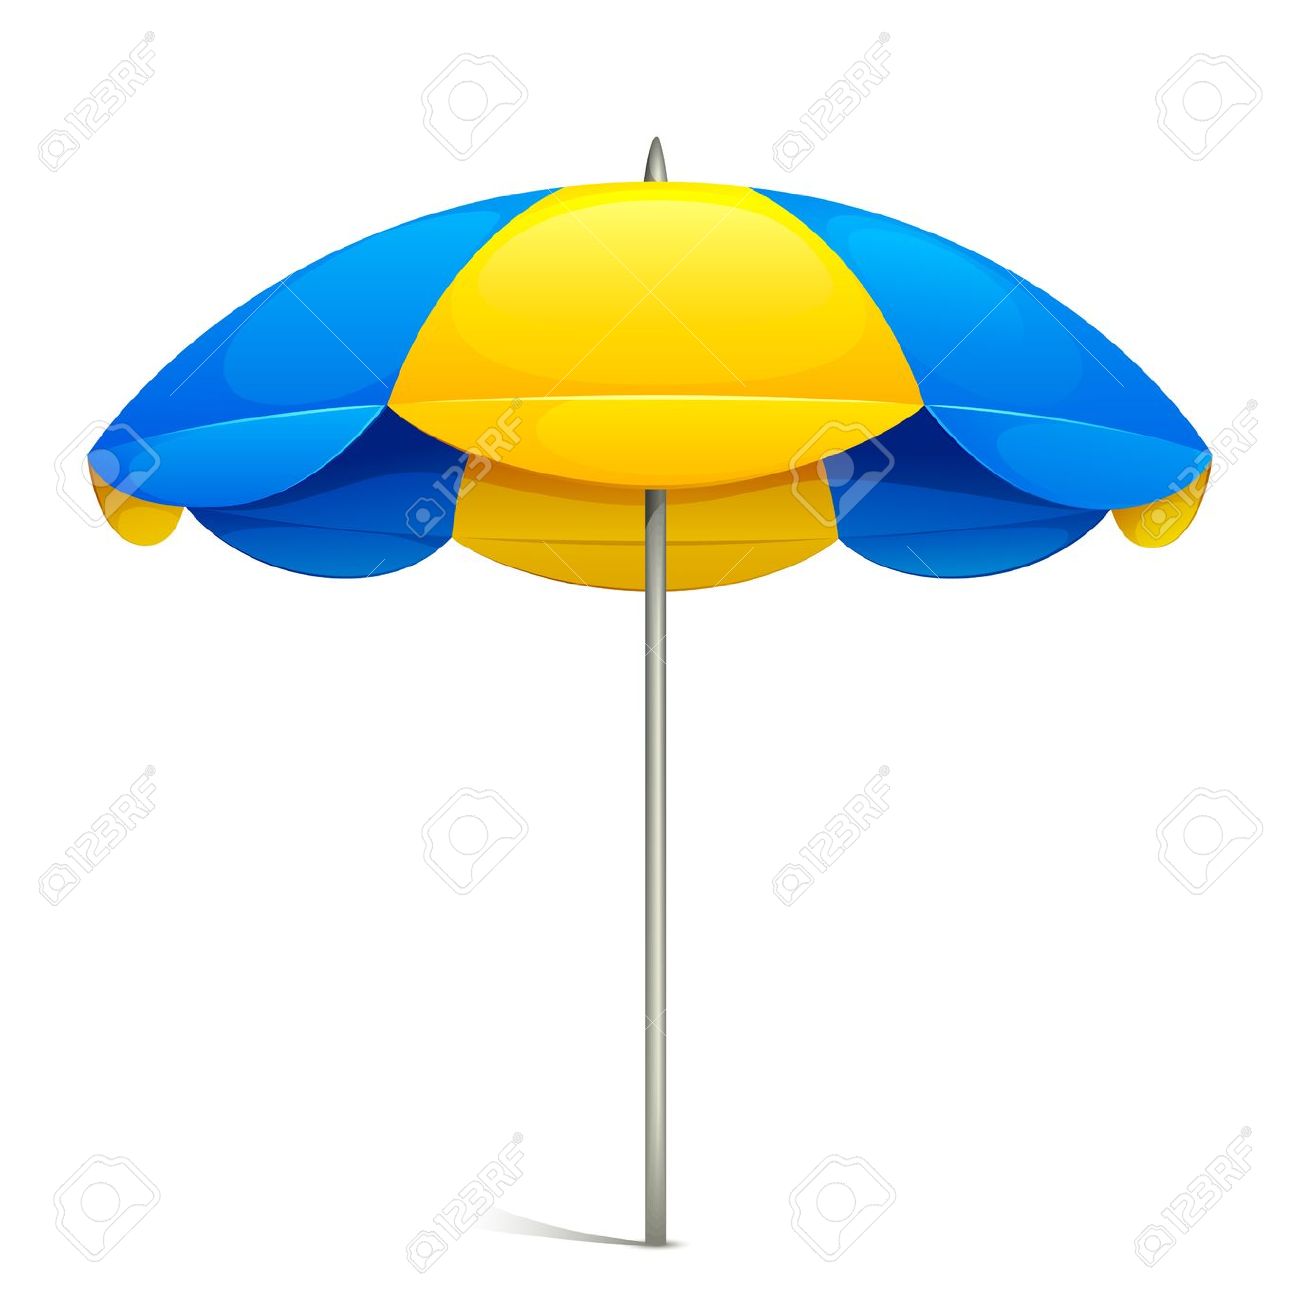 Illustration Of Colorful Beach Umbrella On White Background.